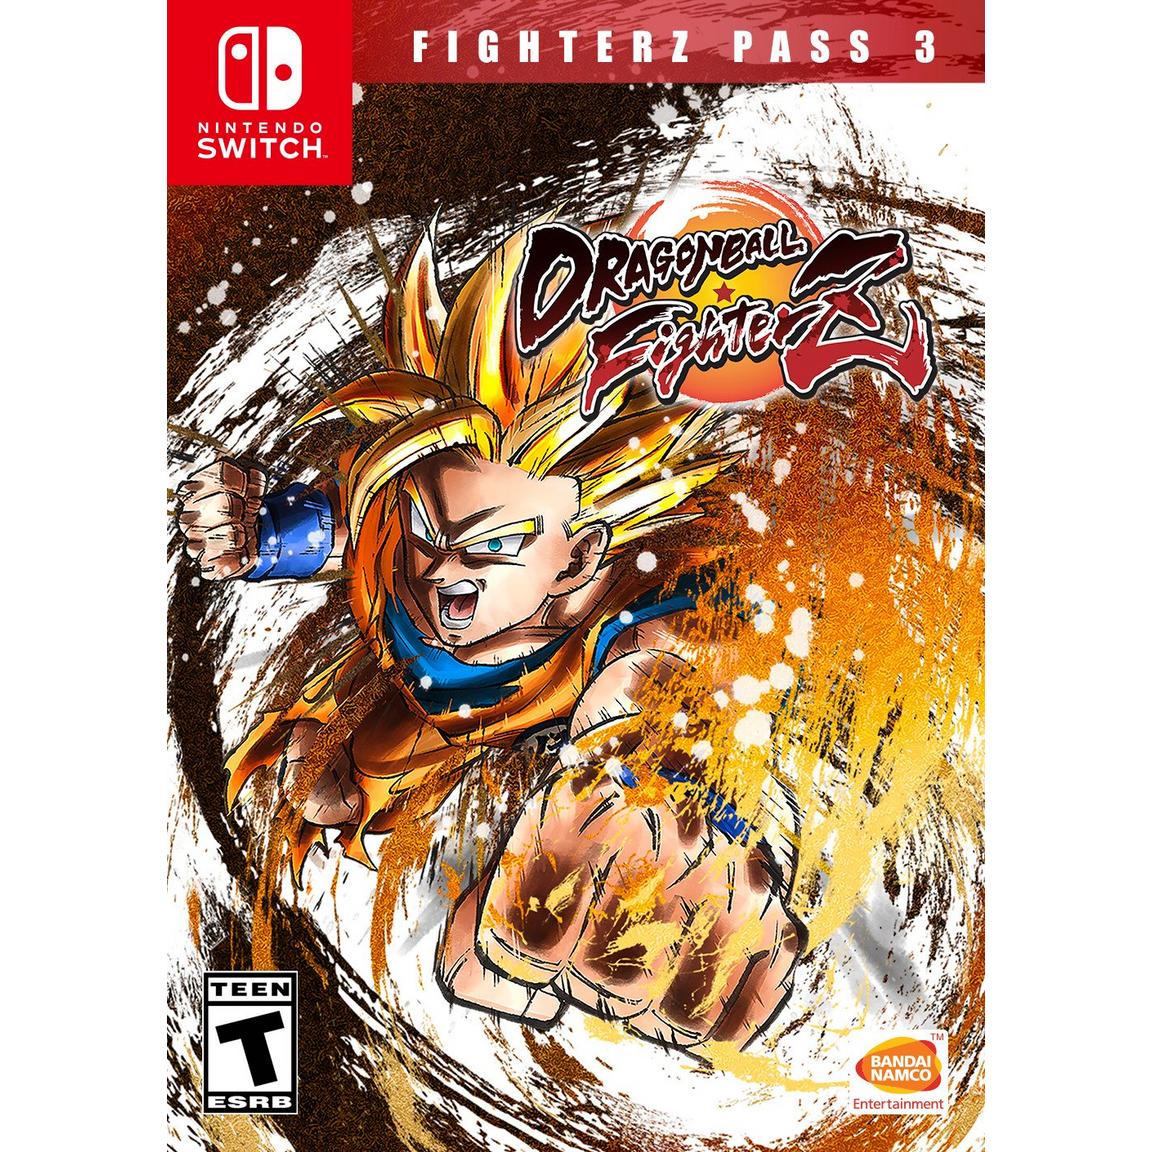 DRAGON BALL FighterZ: FighterZ Pass - Nintendo Switch, Digital